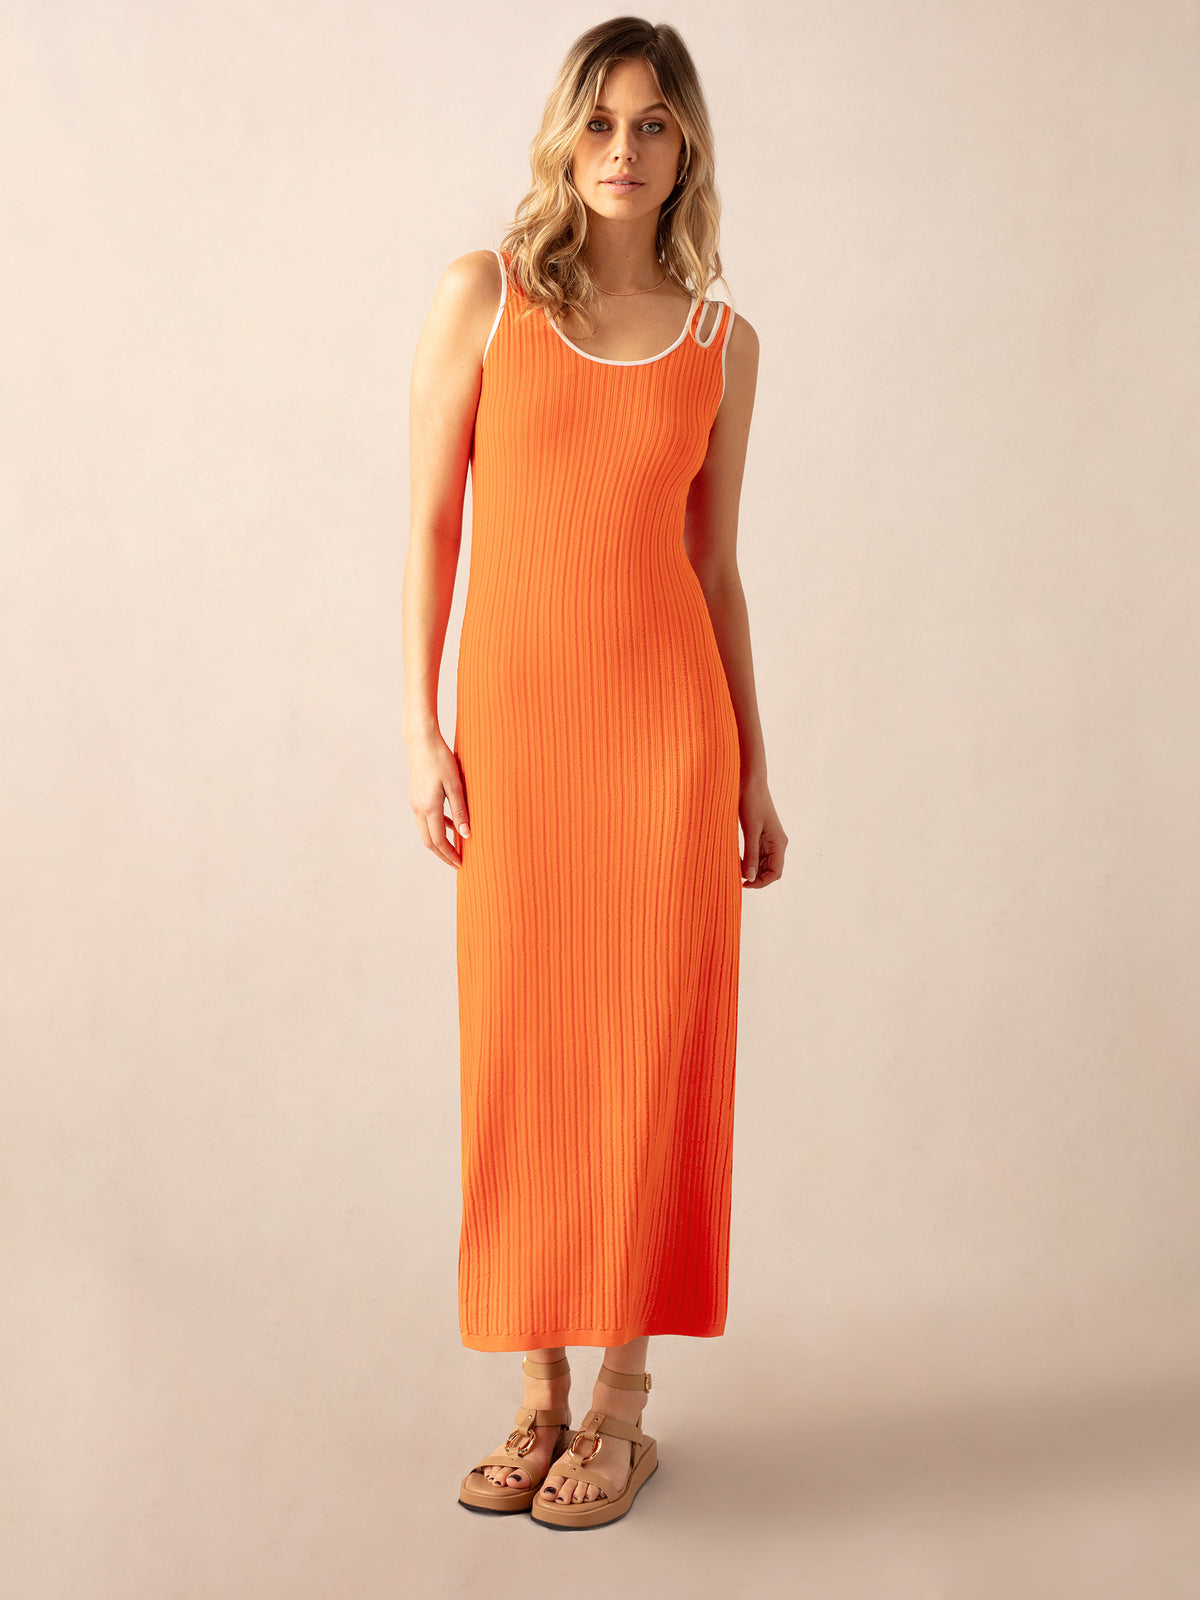 Orange Contrast Cut Out Shoulder Knit Dress